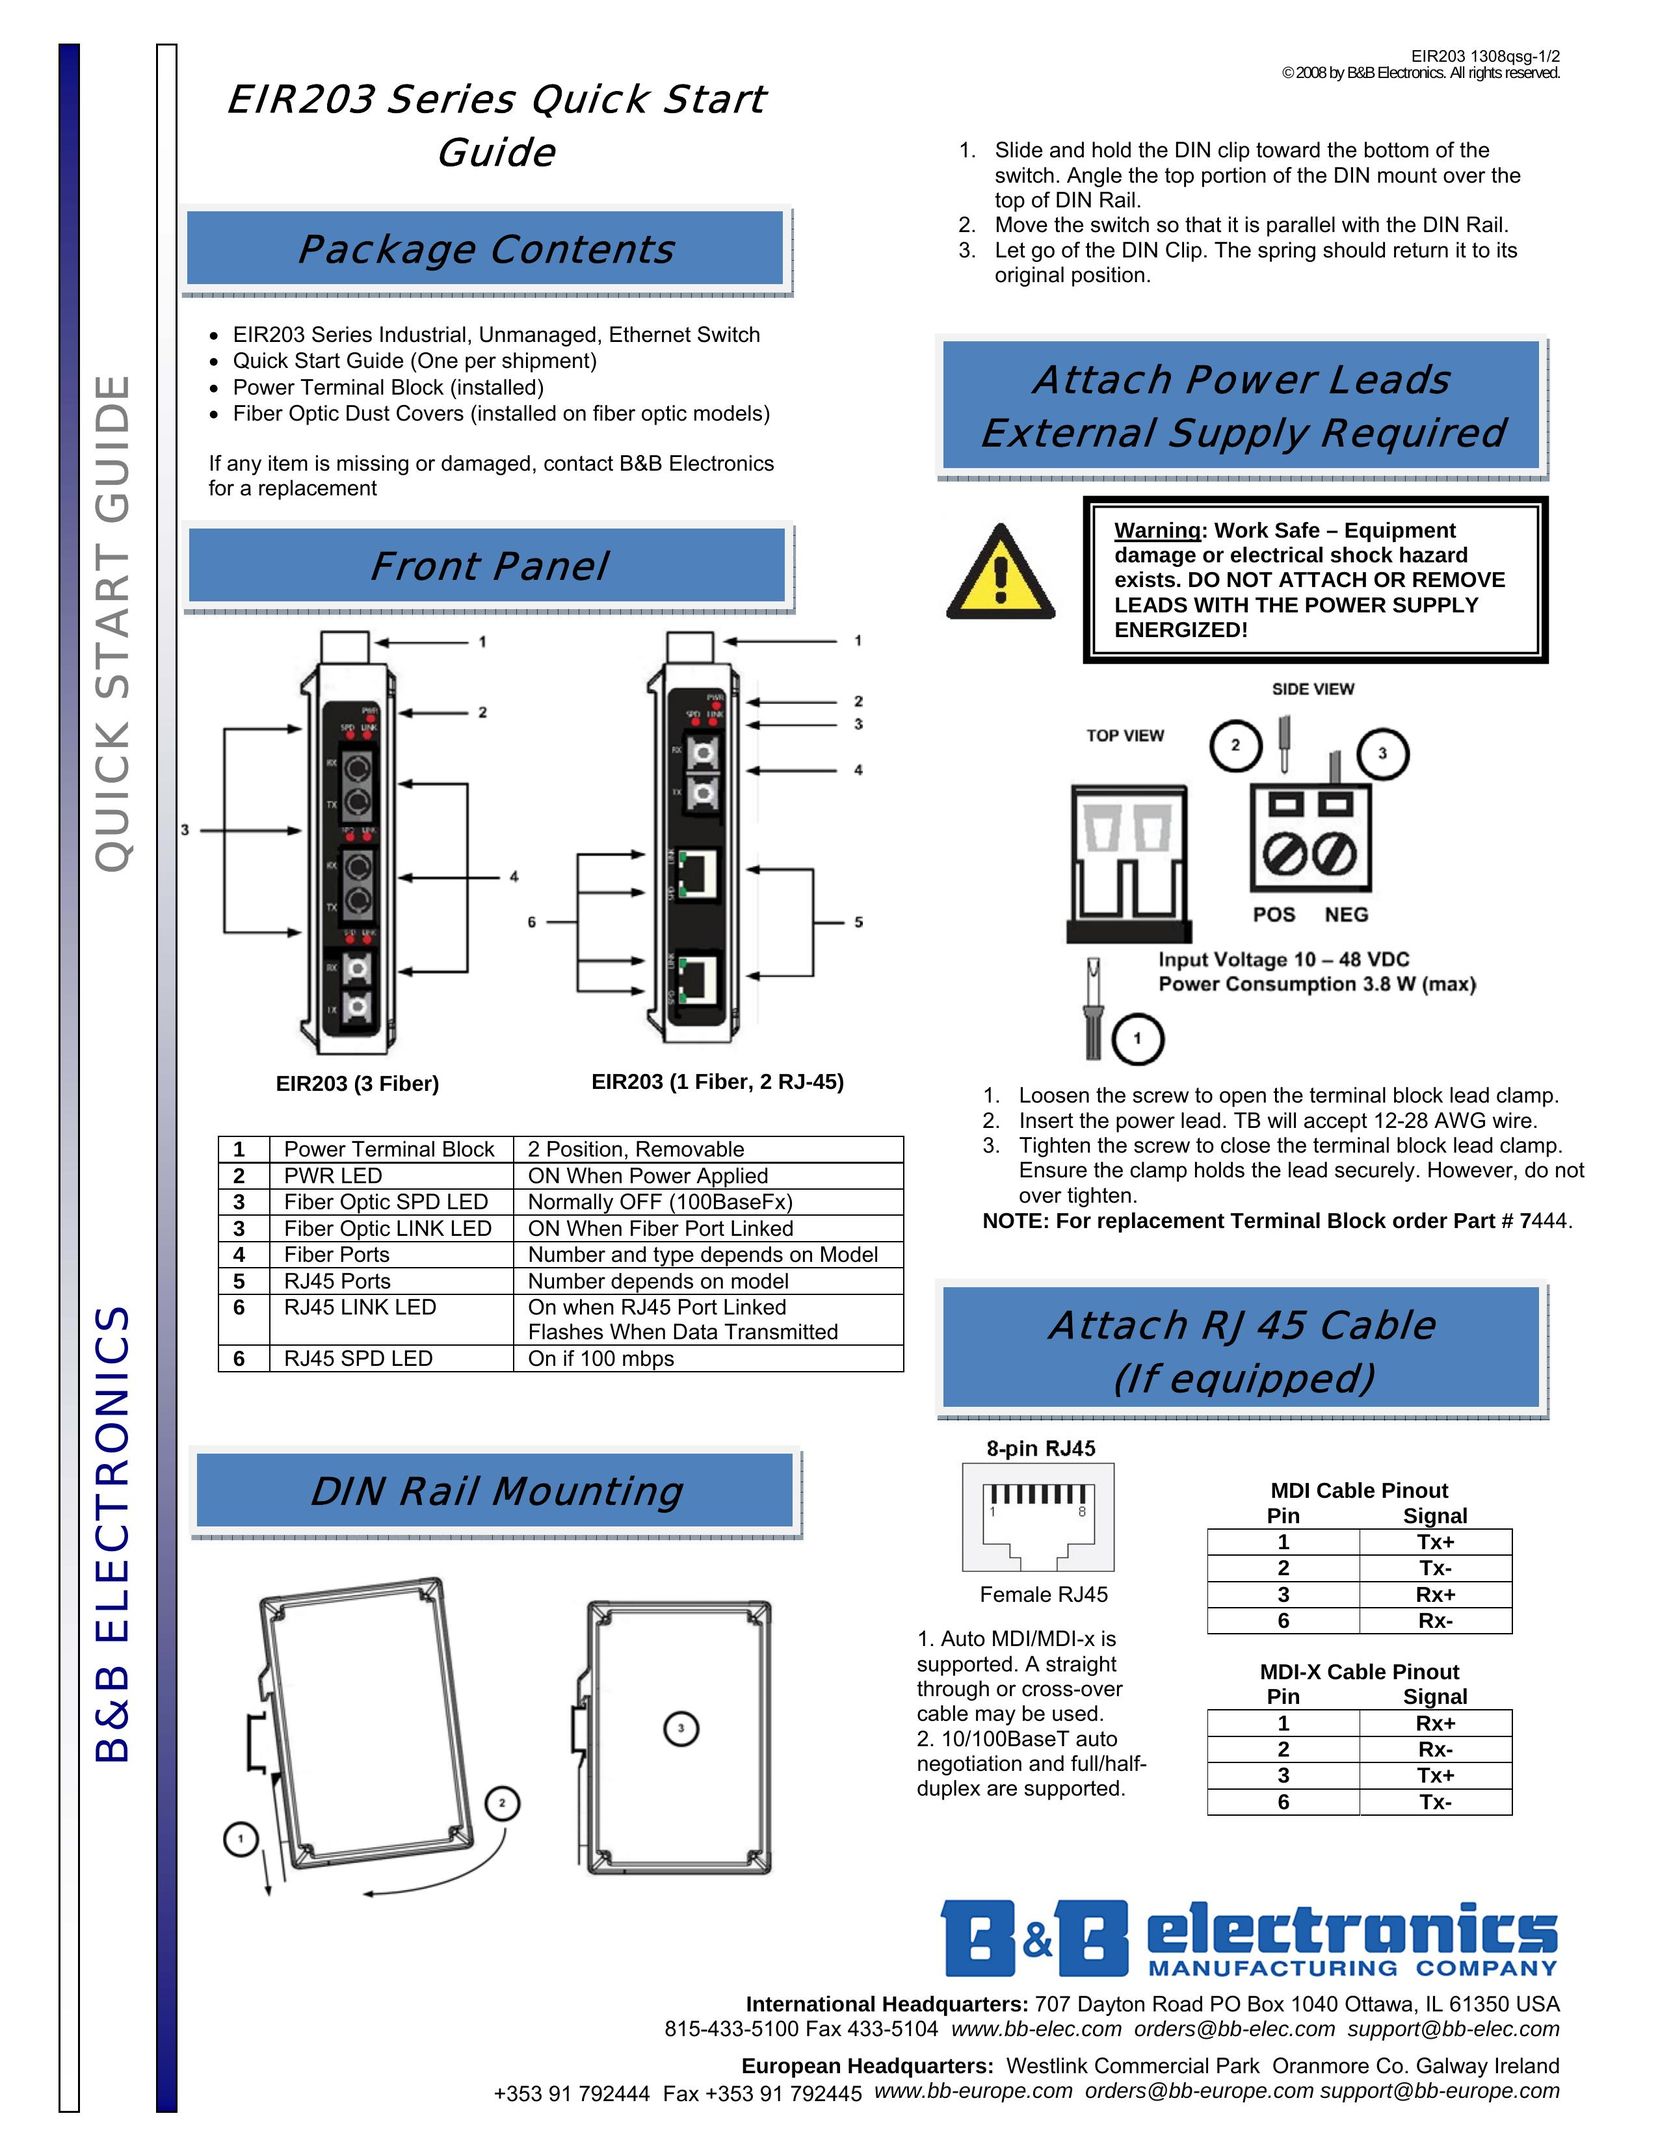 B&B Electronics EIR203-MT Network Card User Manual